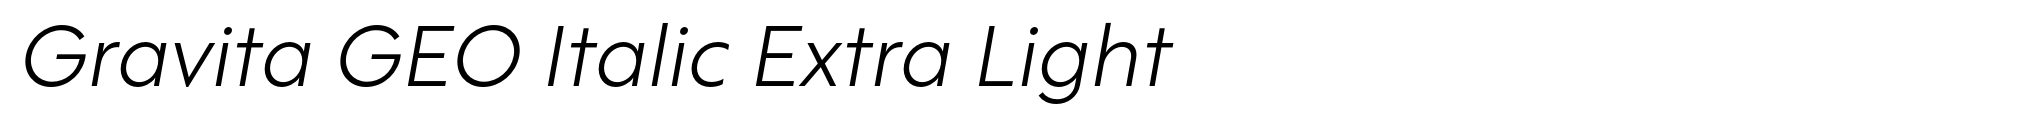 Gravita GEO Italic Extra Light image